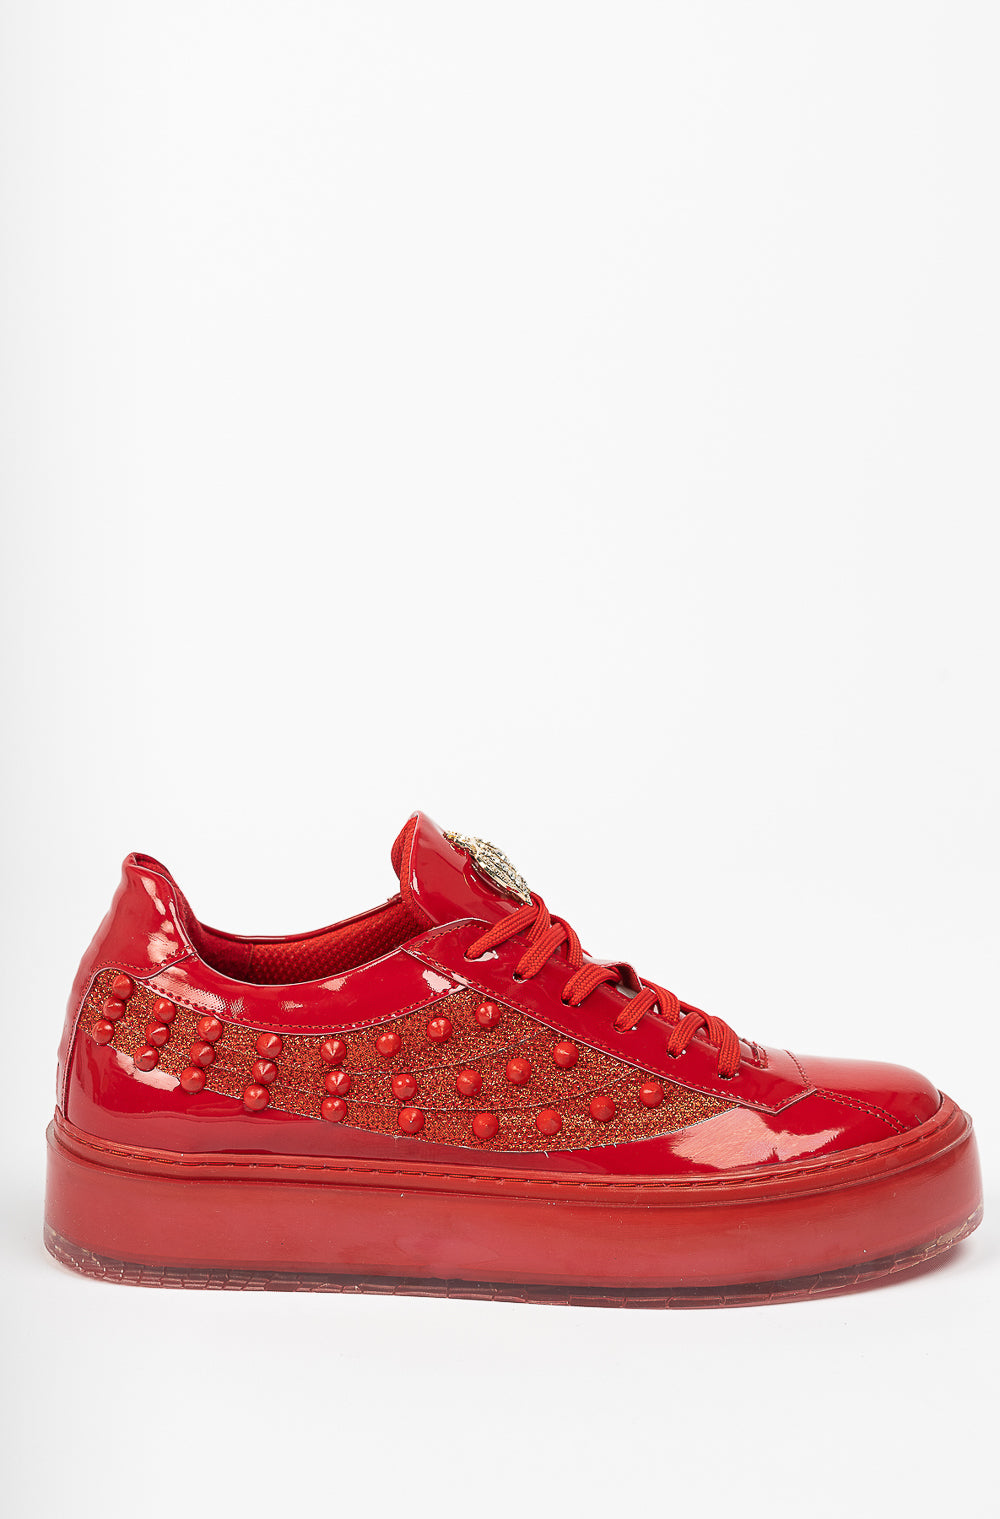 Majesty Red Devil - Swagg Splash Sneakers